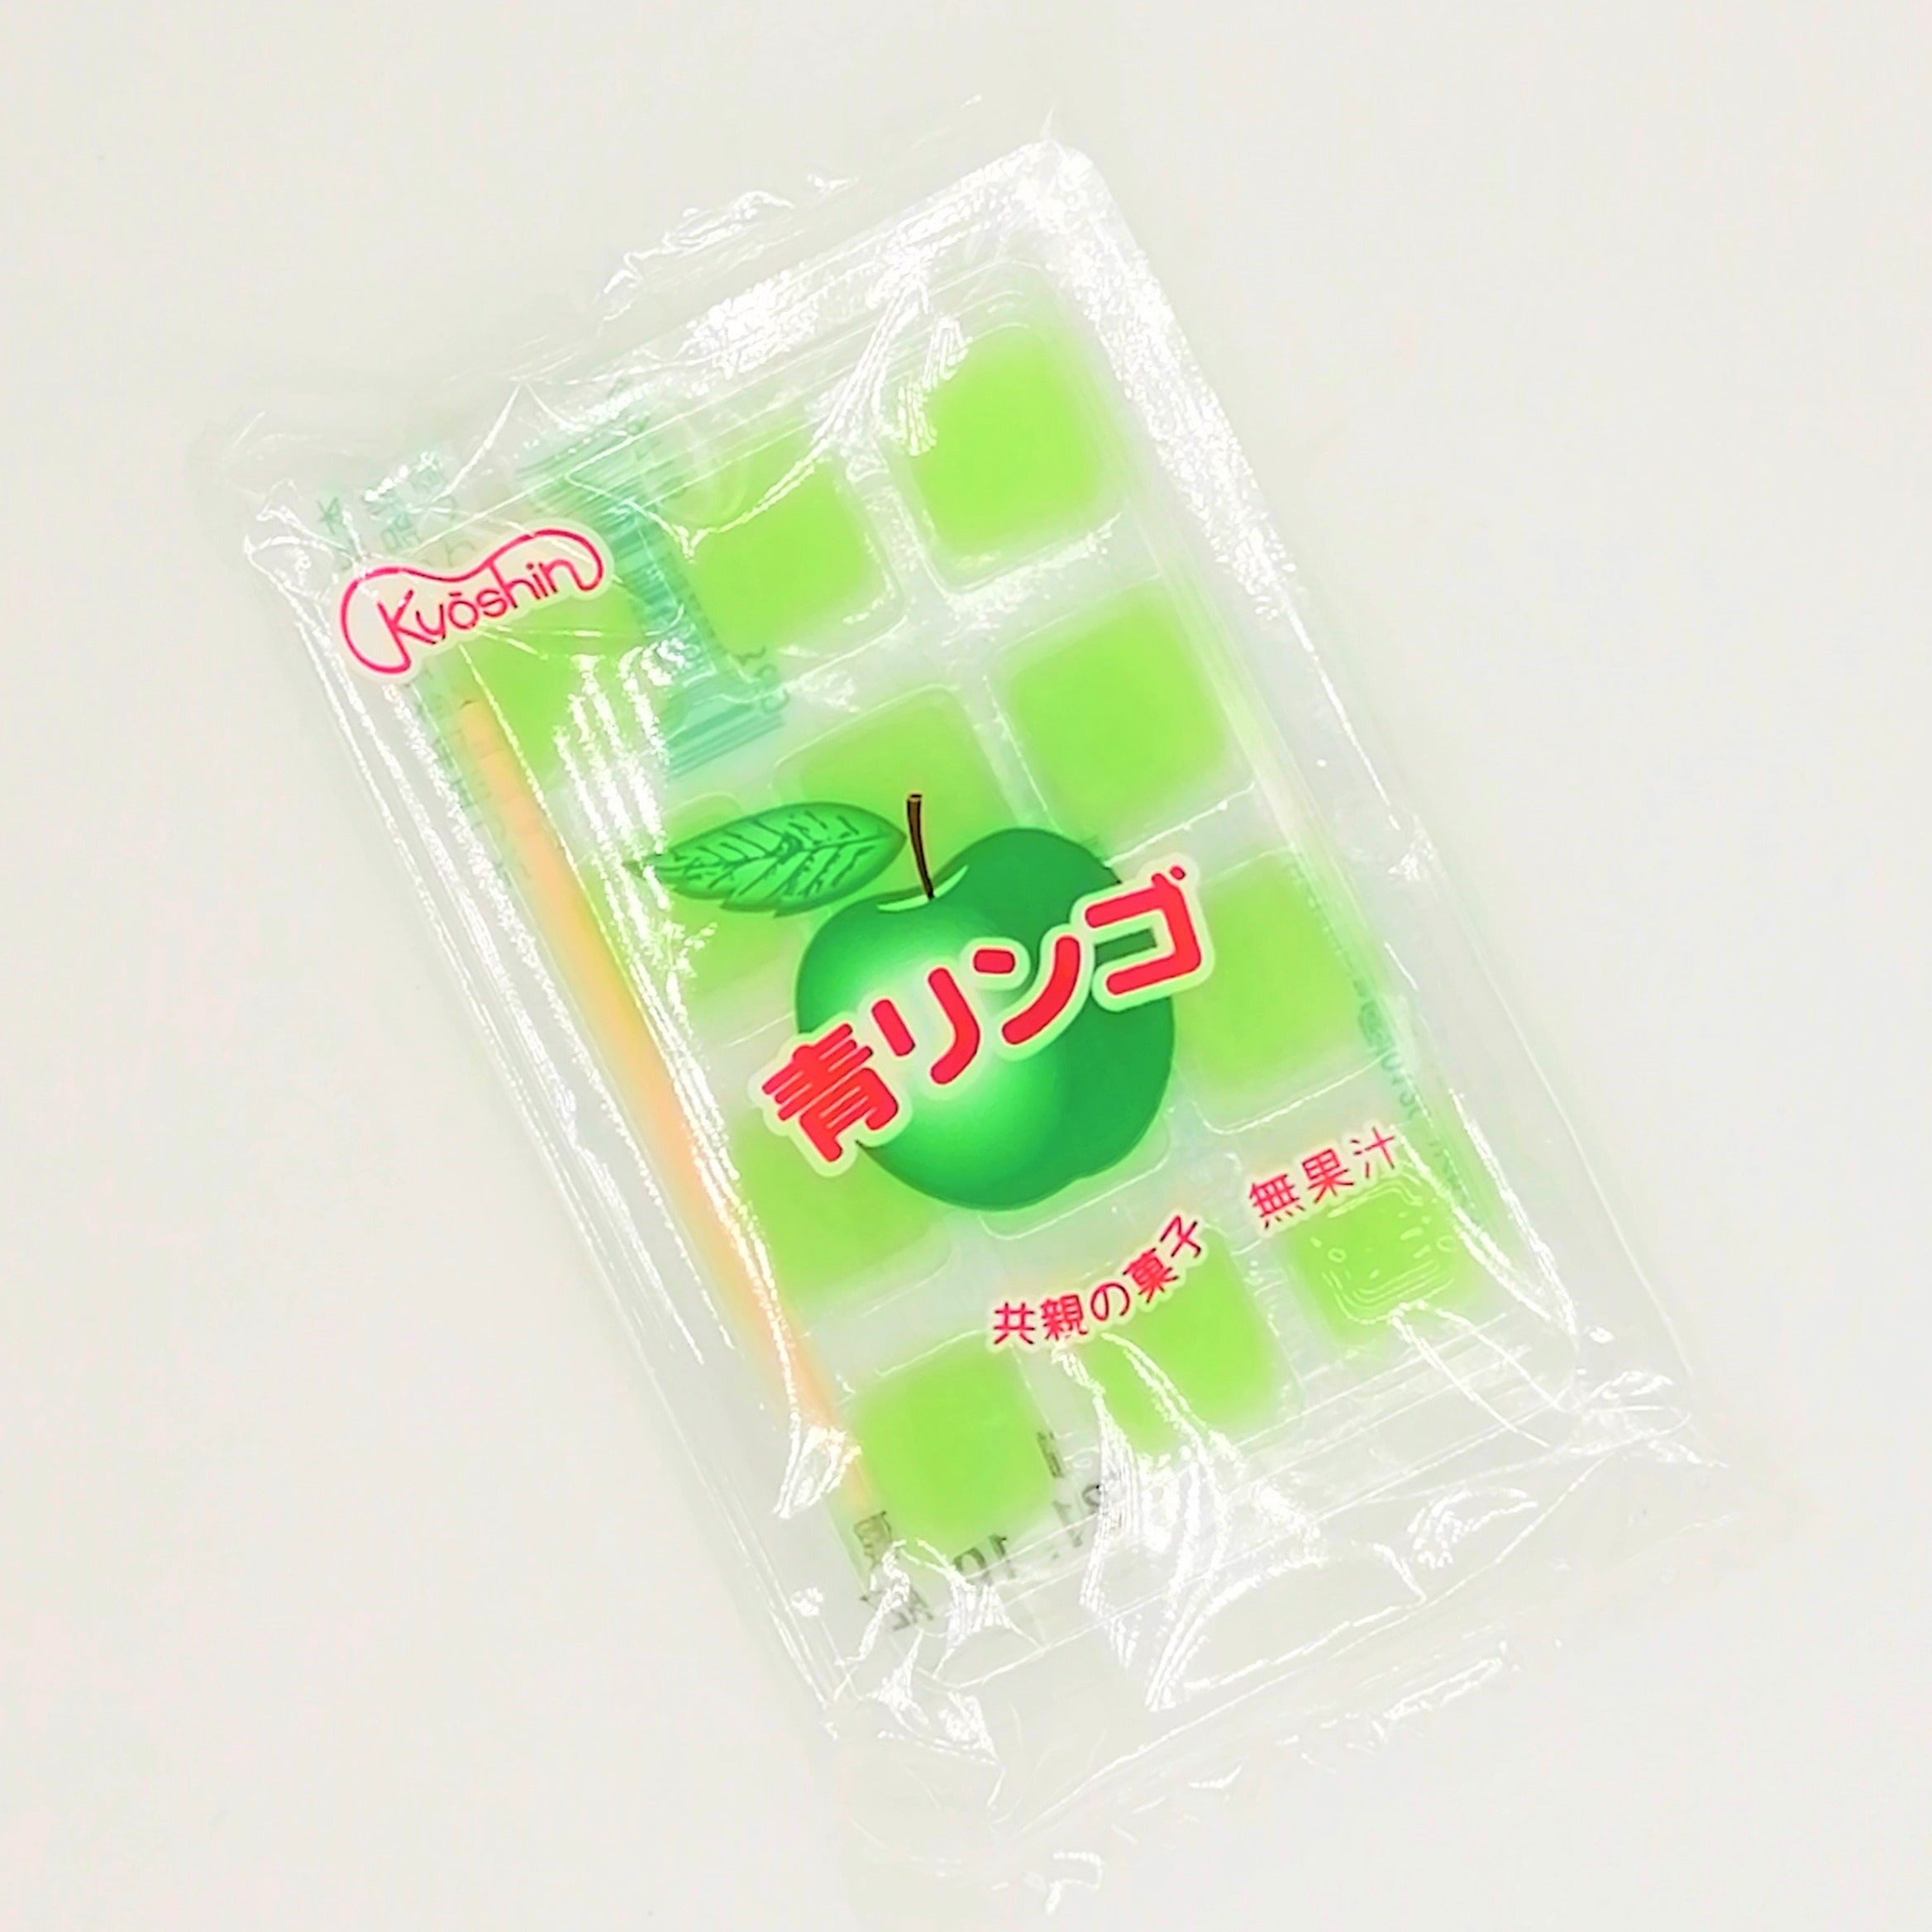 Kyoshin Green Apple Mochi Candy